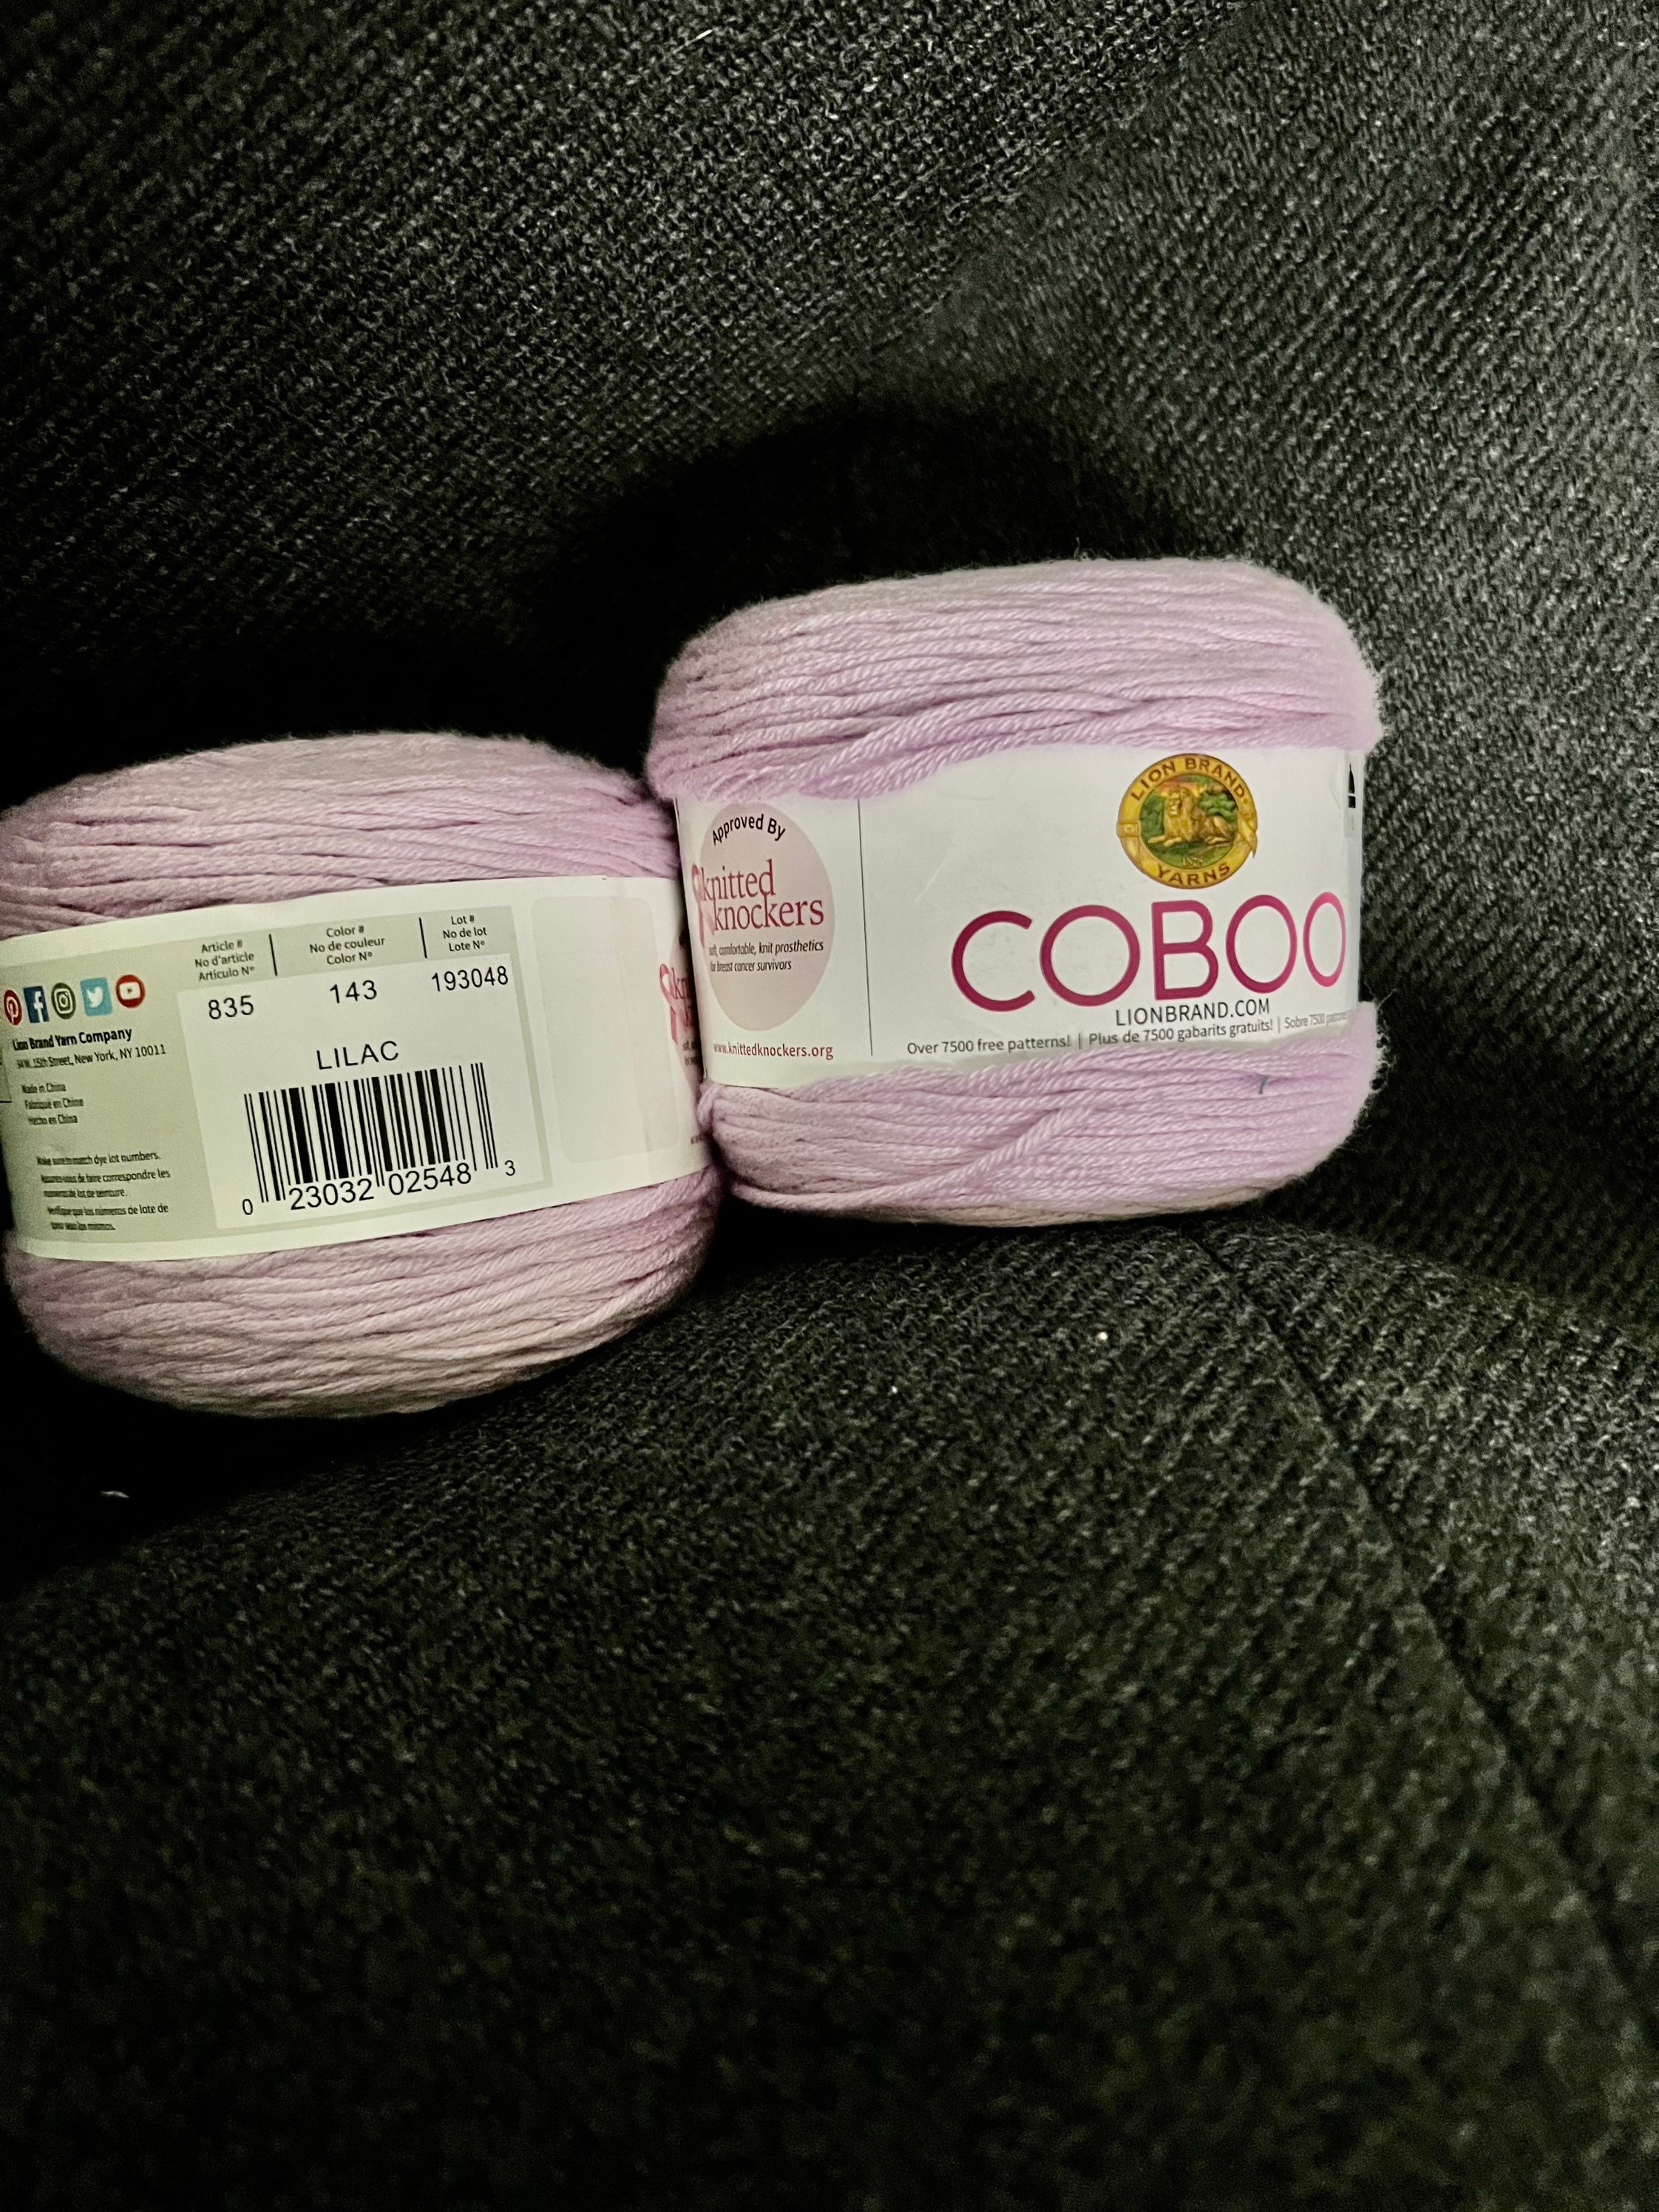 Lion Brand Coboo Yarn